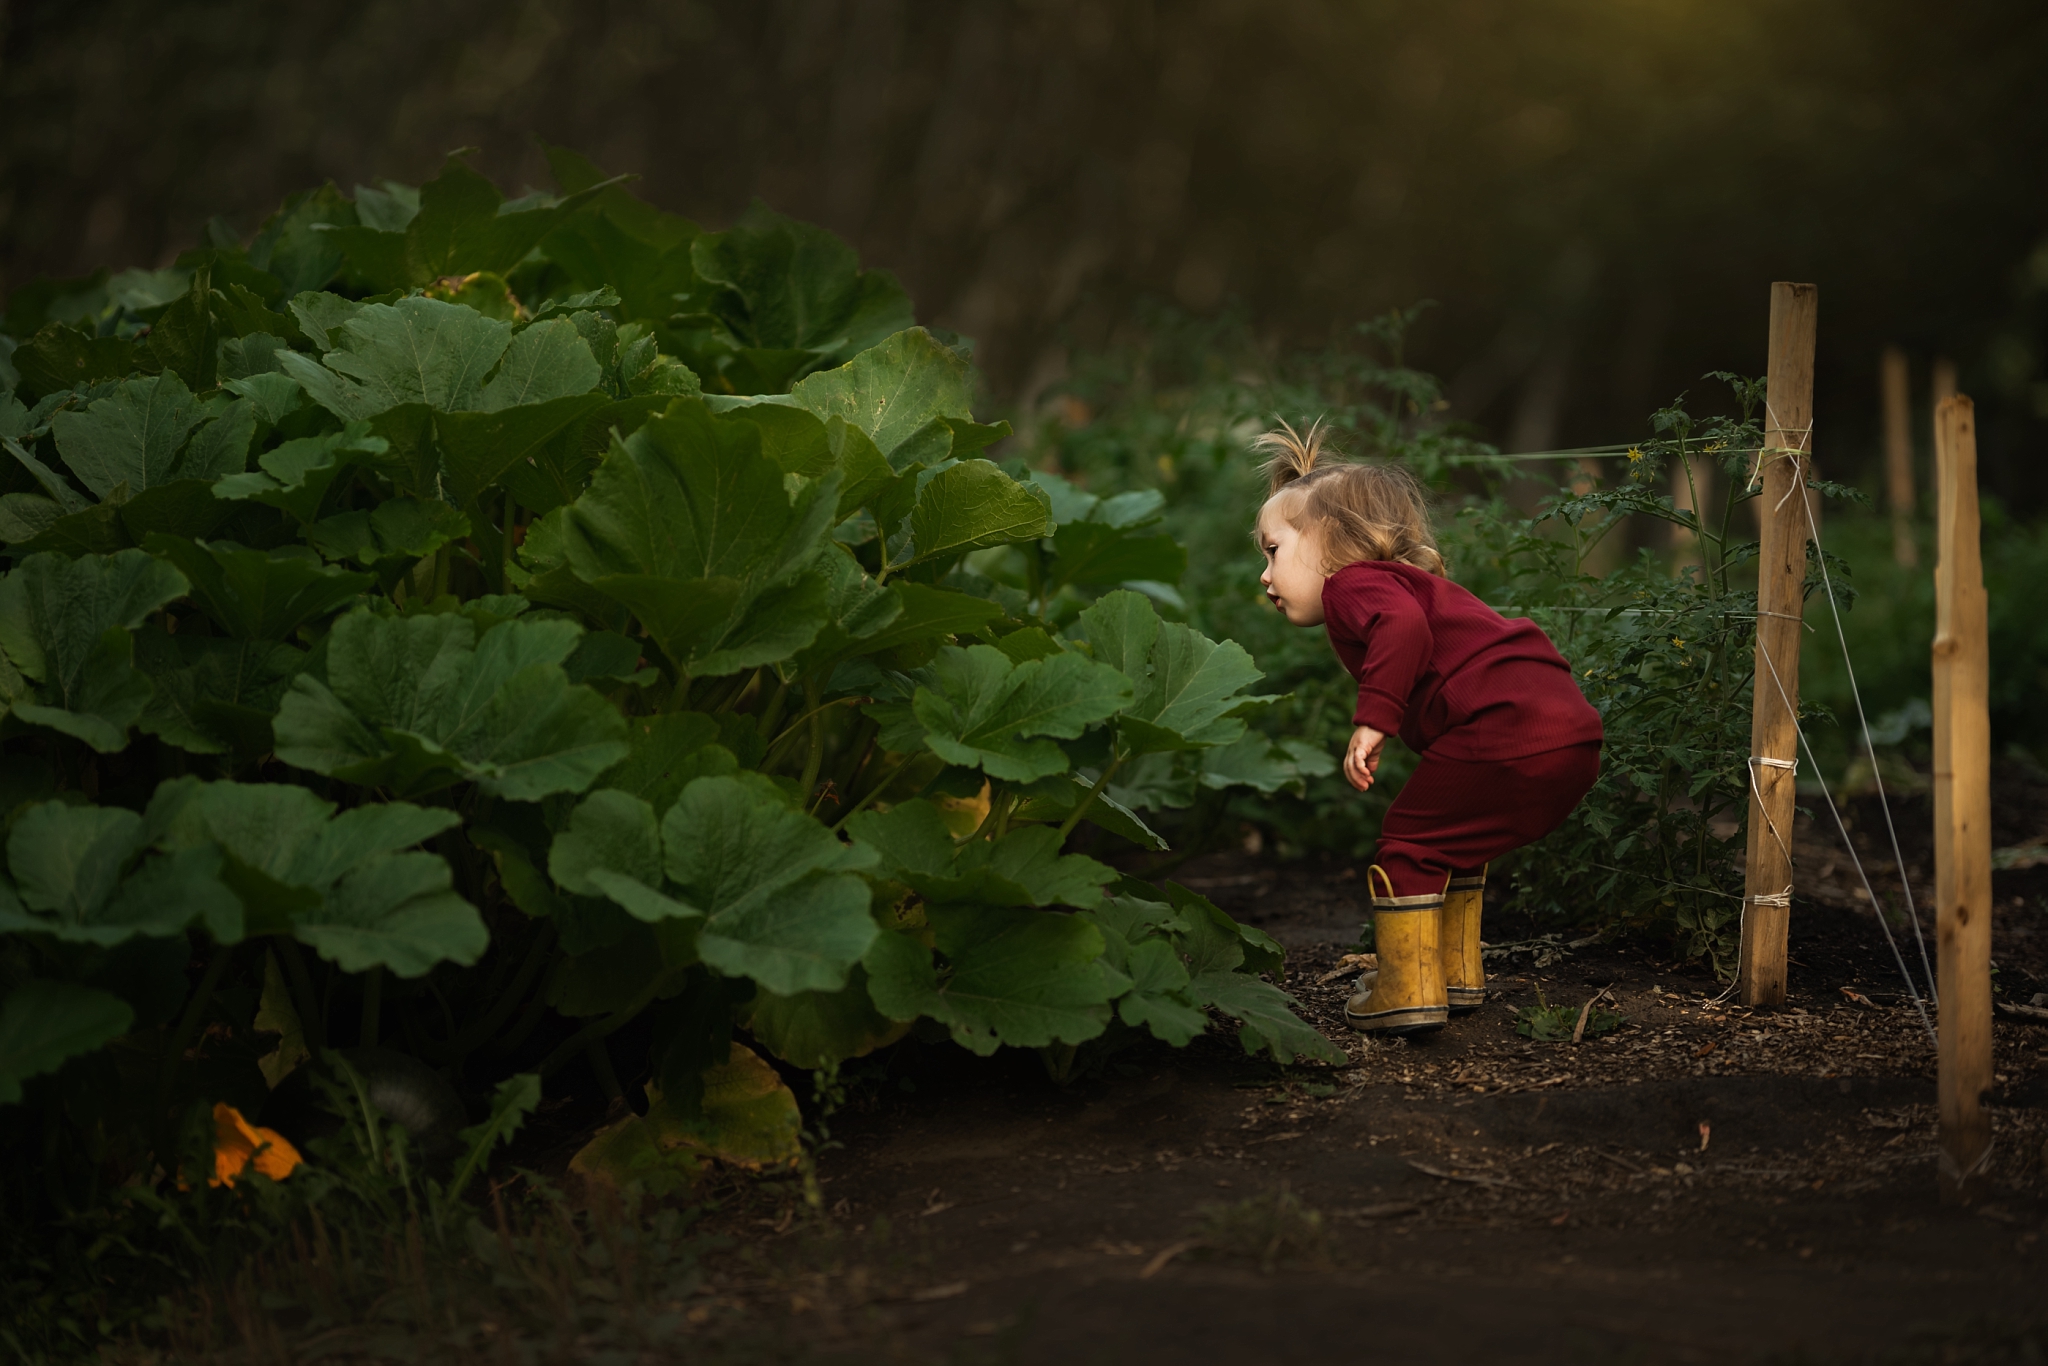 From backyard to dream location - little girl in garden